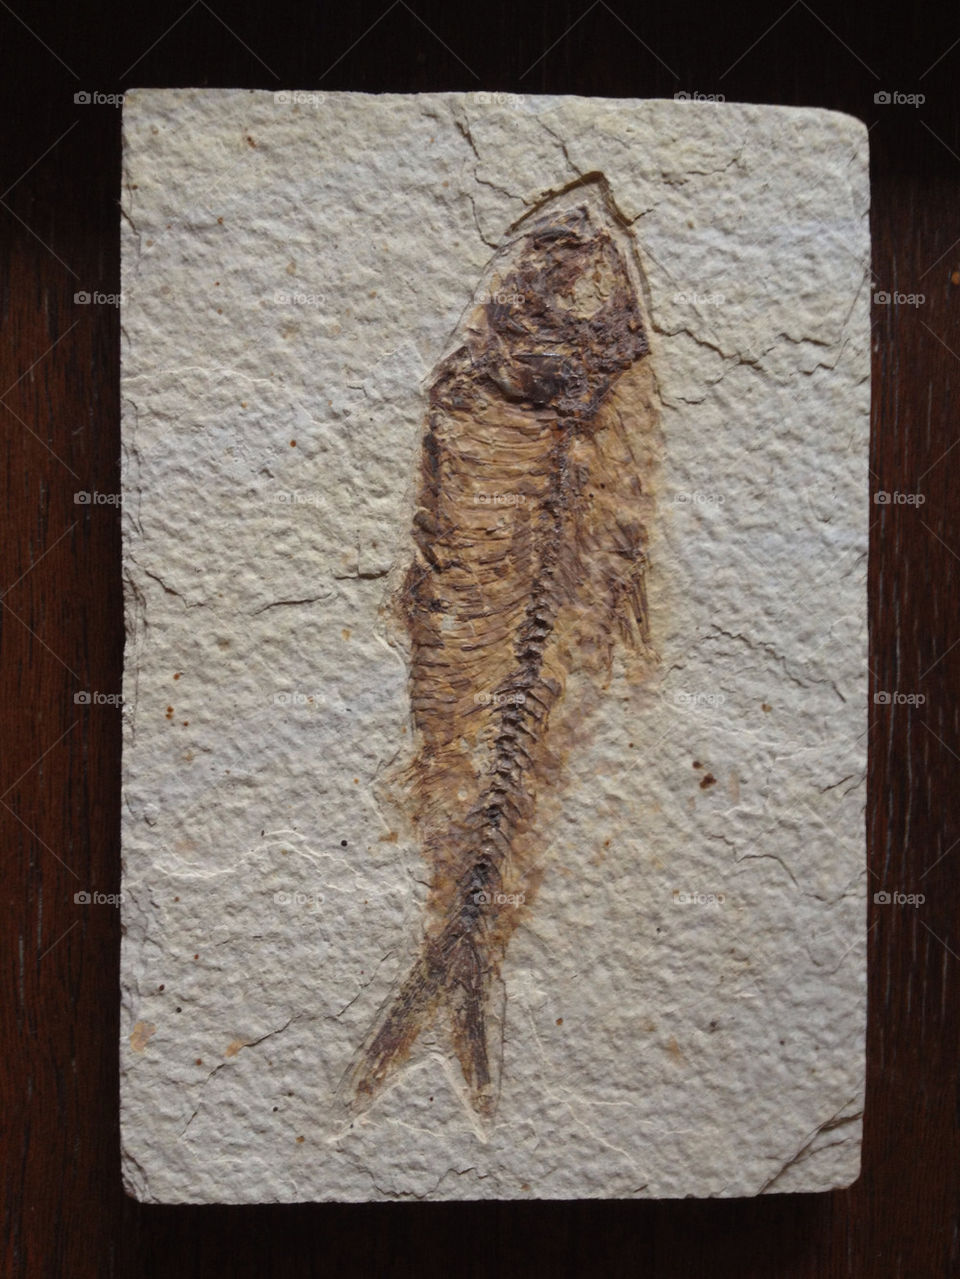 fish stone fossil by davidi92260